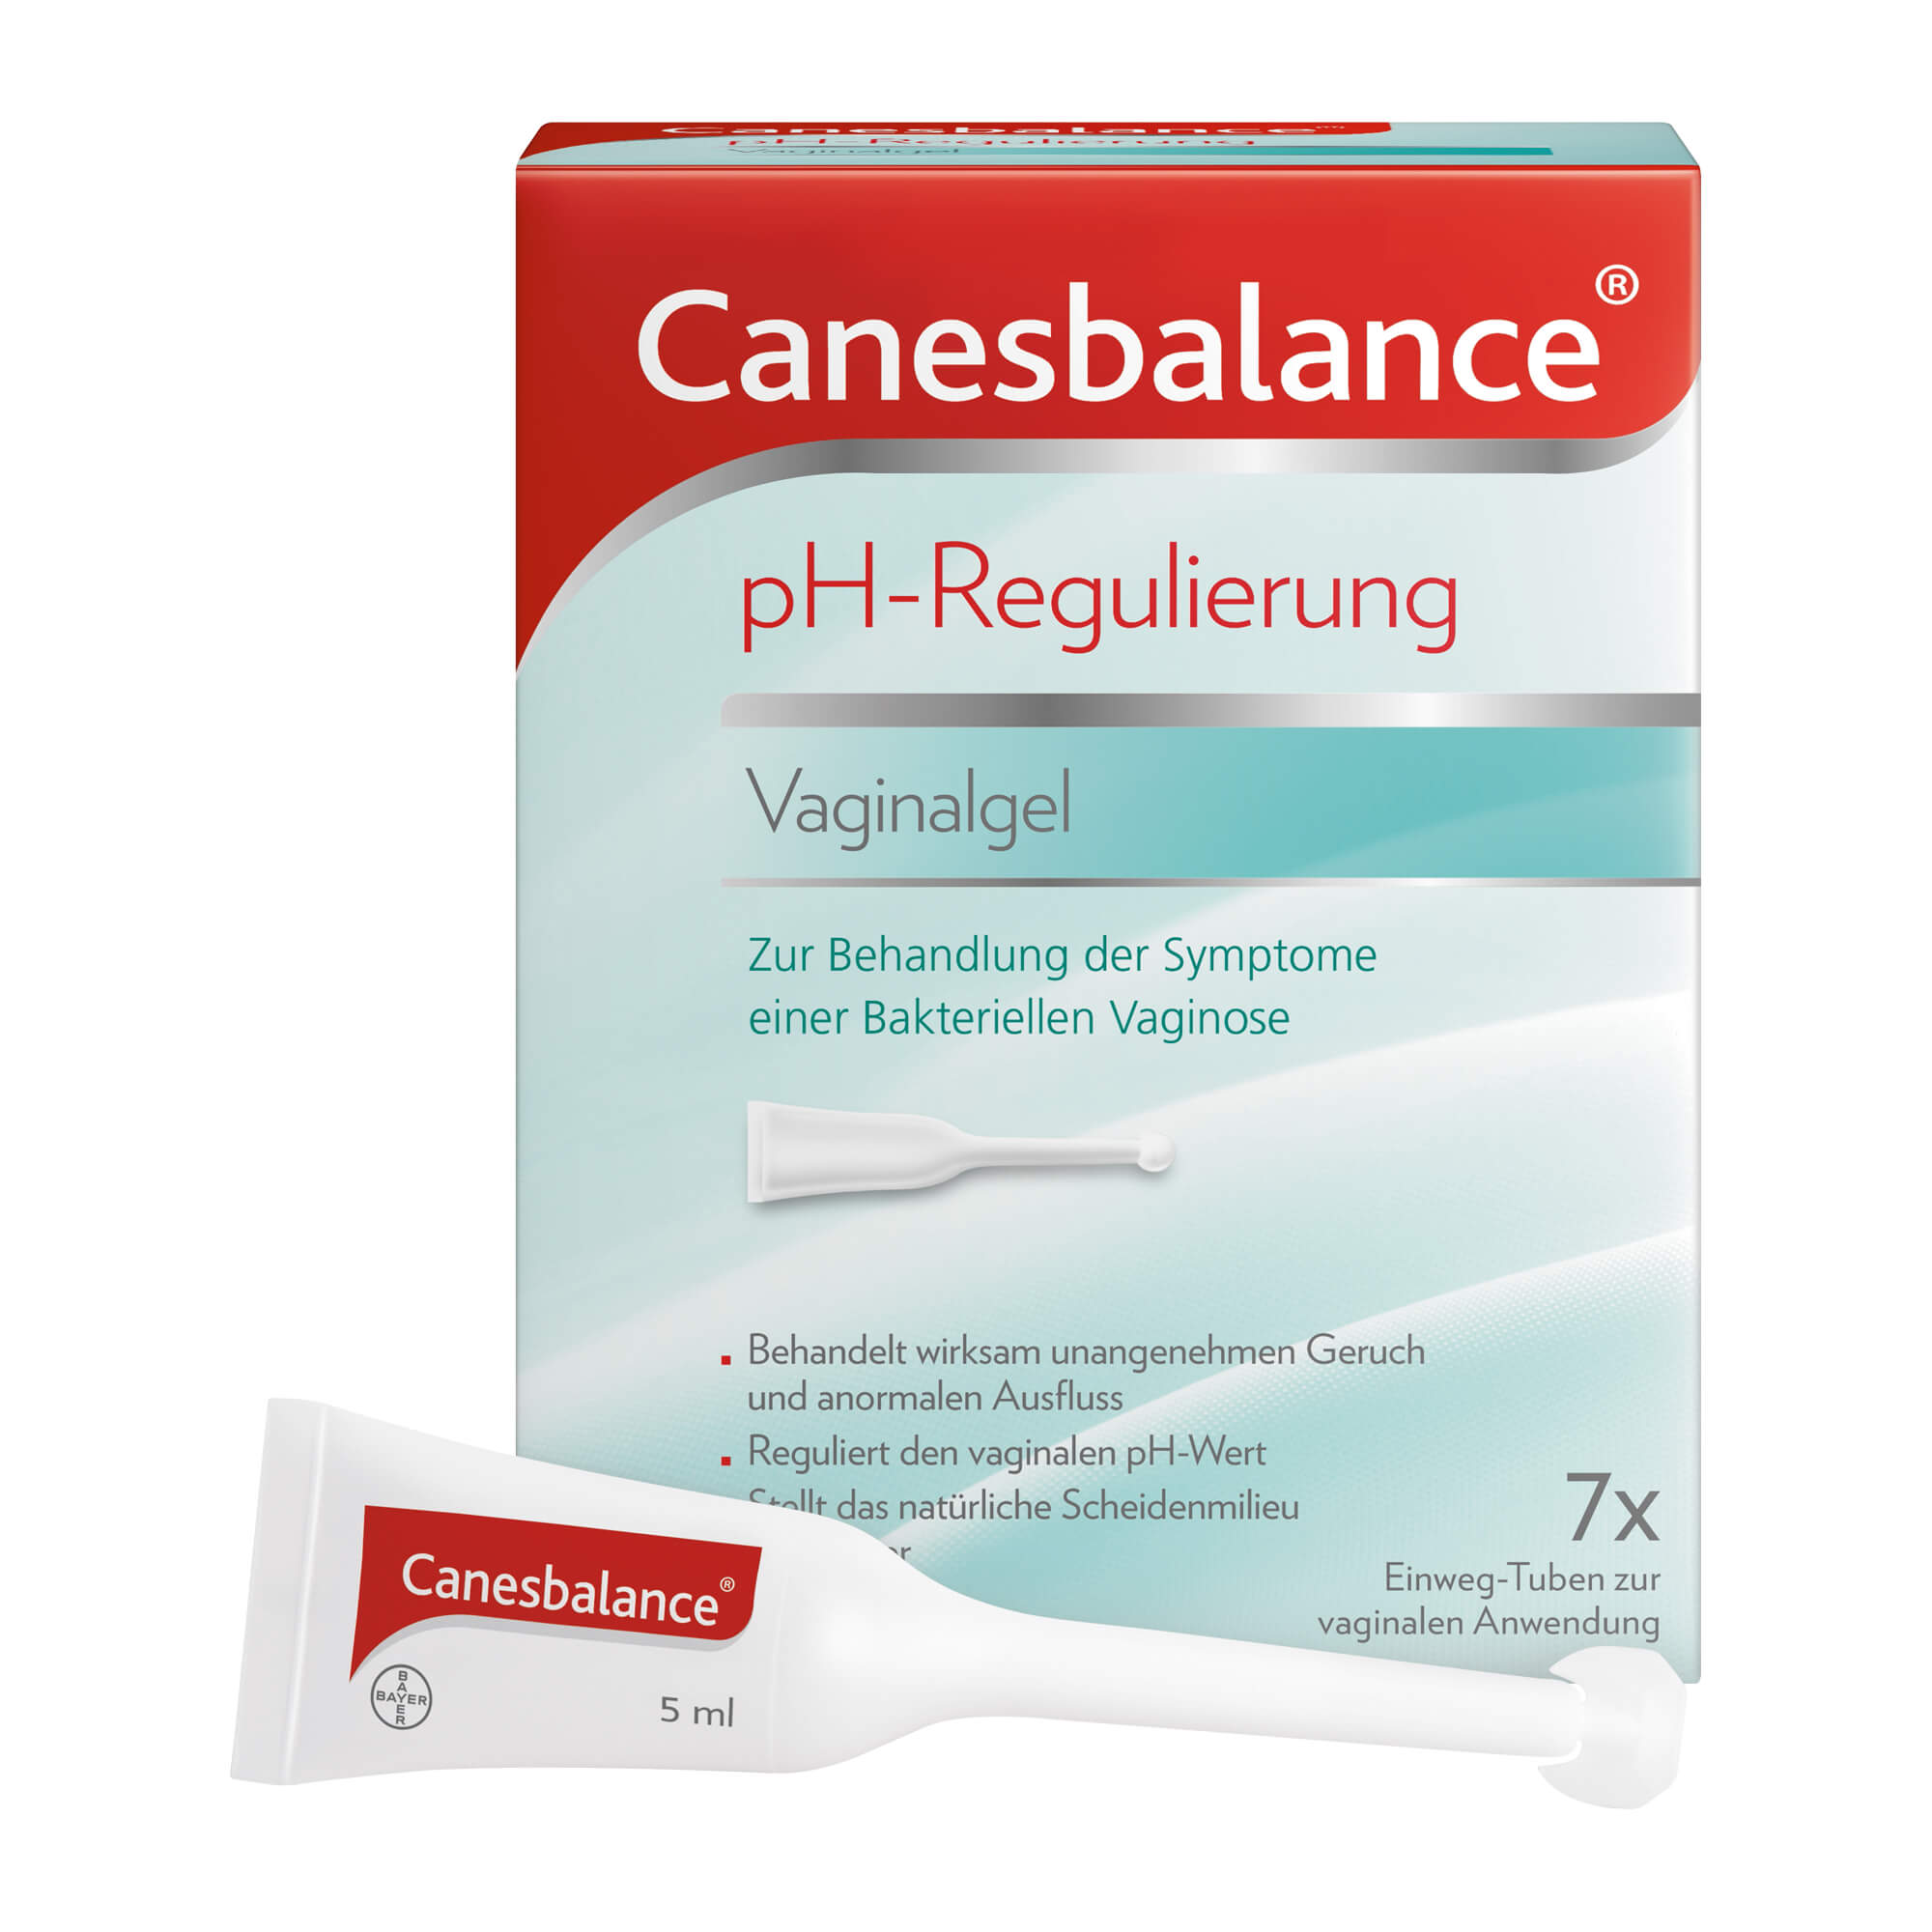 Canesbalance pH-Regulierung Vaginalgel